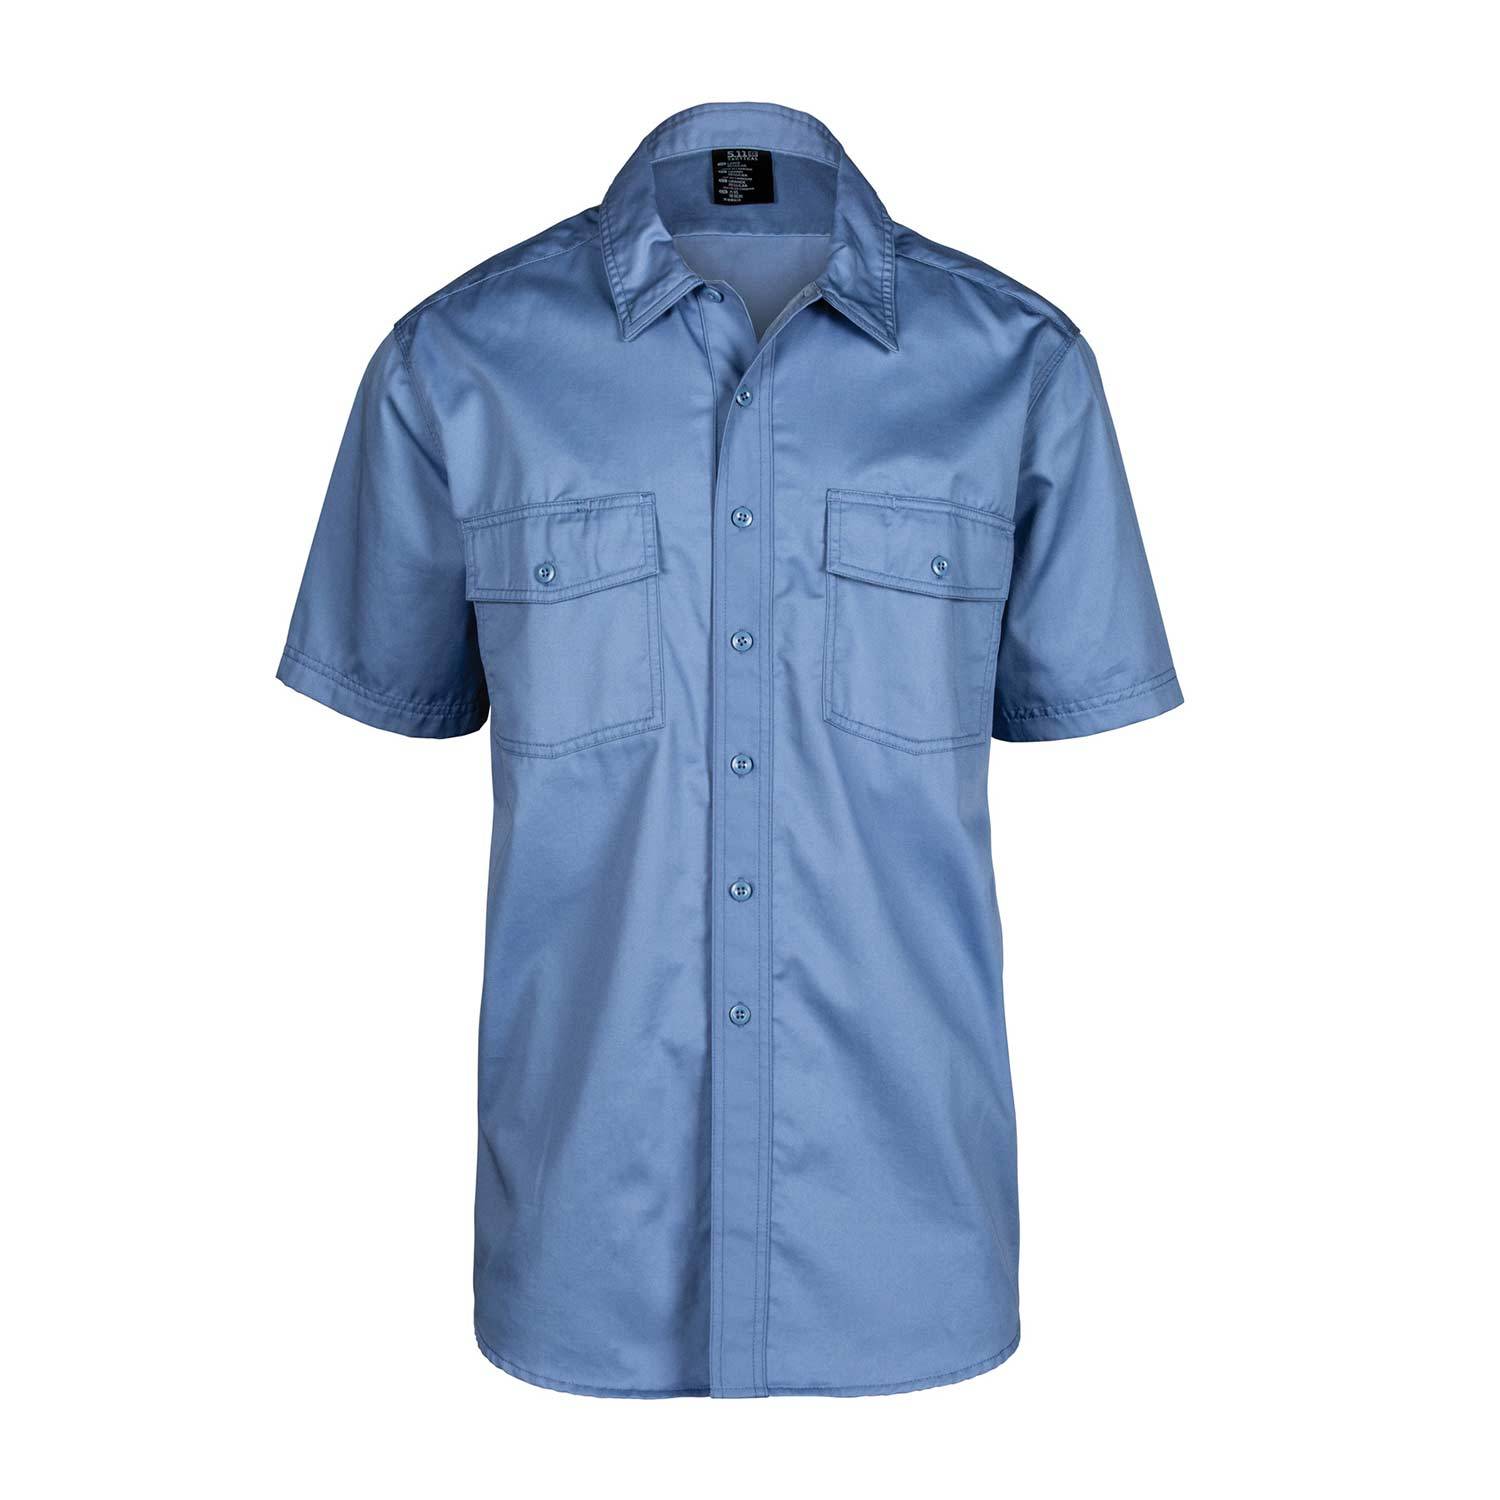 5.11 Tactical Short Sleeve Company Shirt